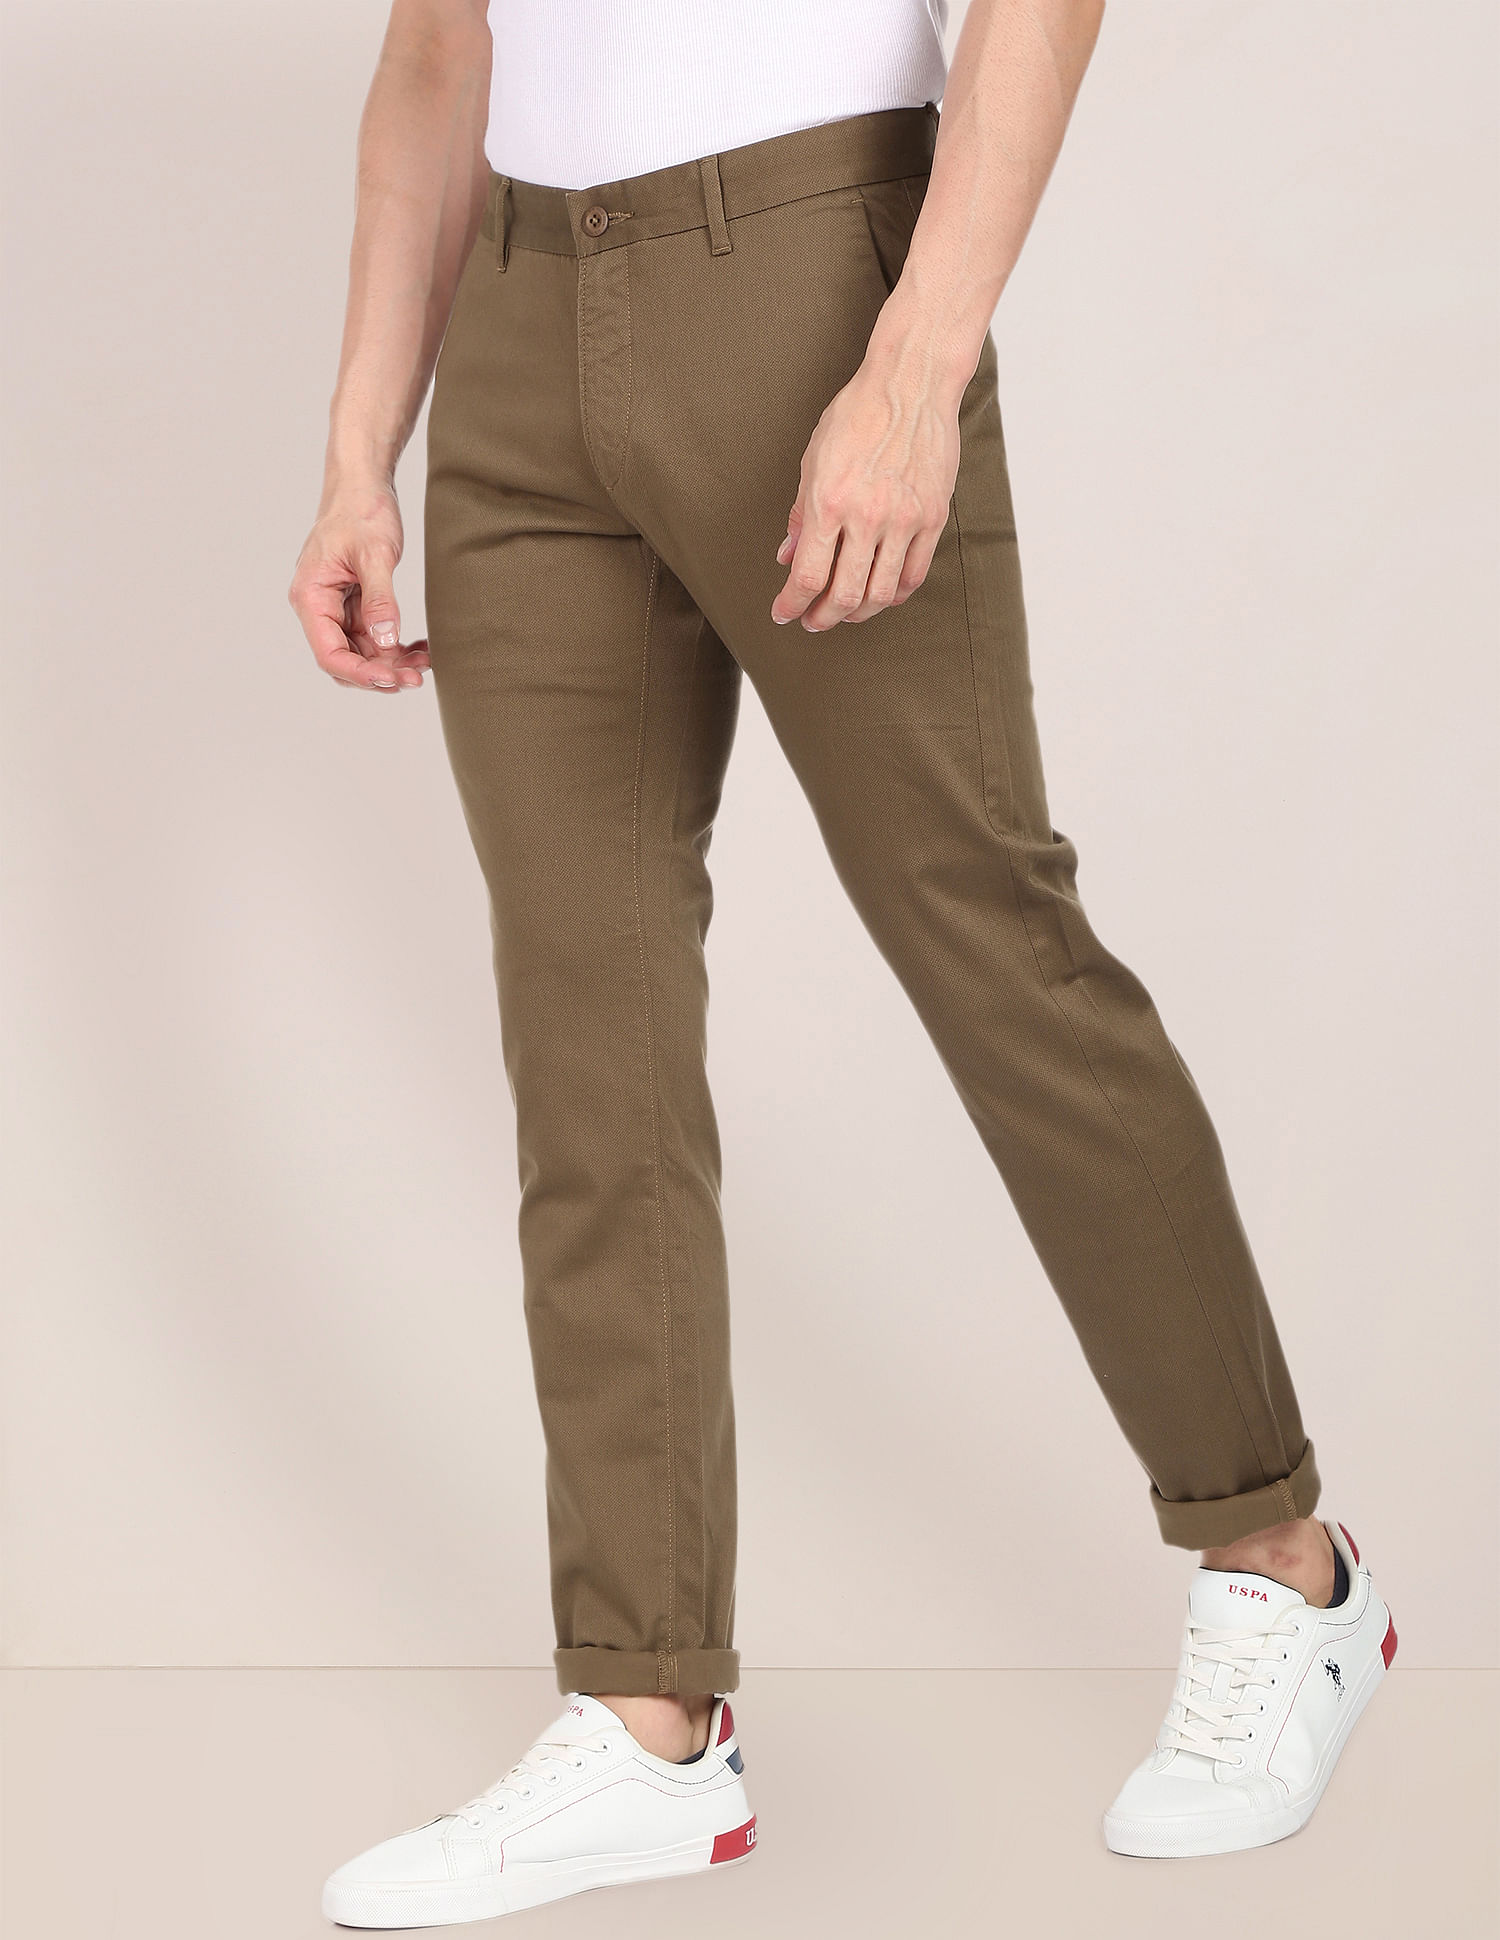 U.S. Polo Assn. Womens Script Logo Super Soft Lounge Pajama Pants Plus Size  Navy 1-X-Large at Amazon Women's Clothing store